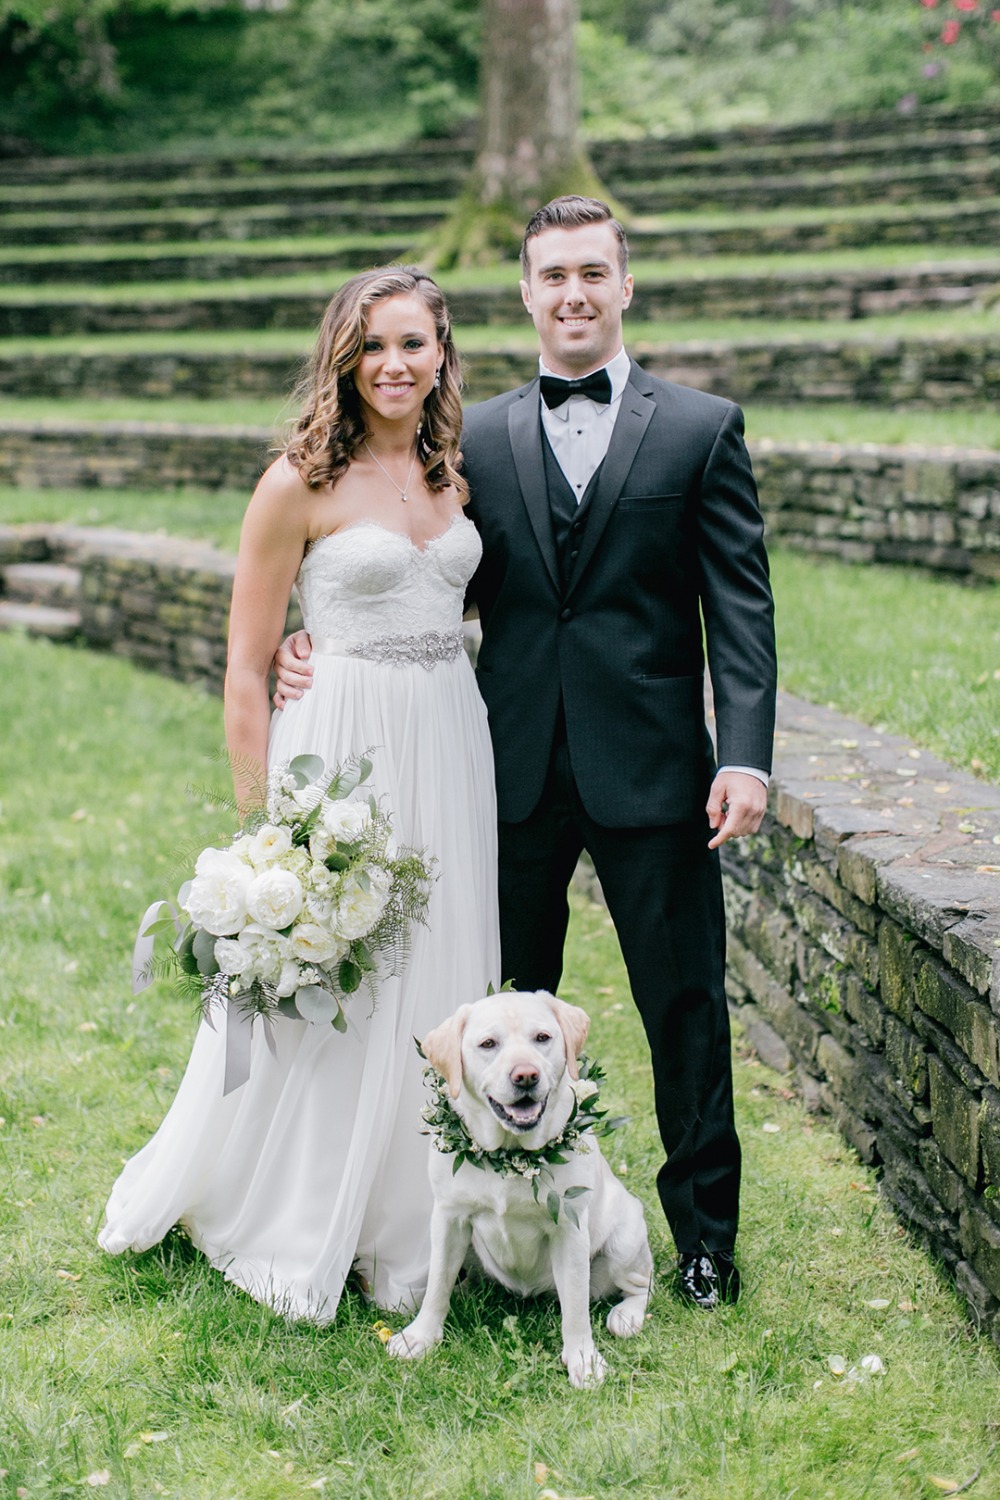 Wedding pup photo idea